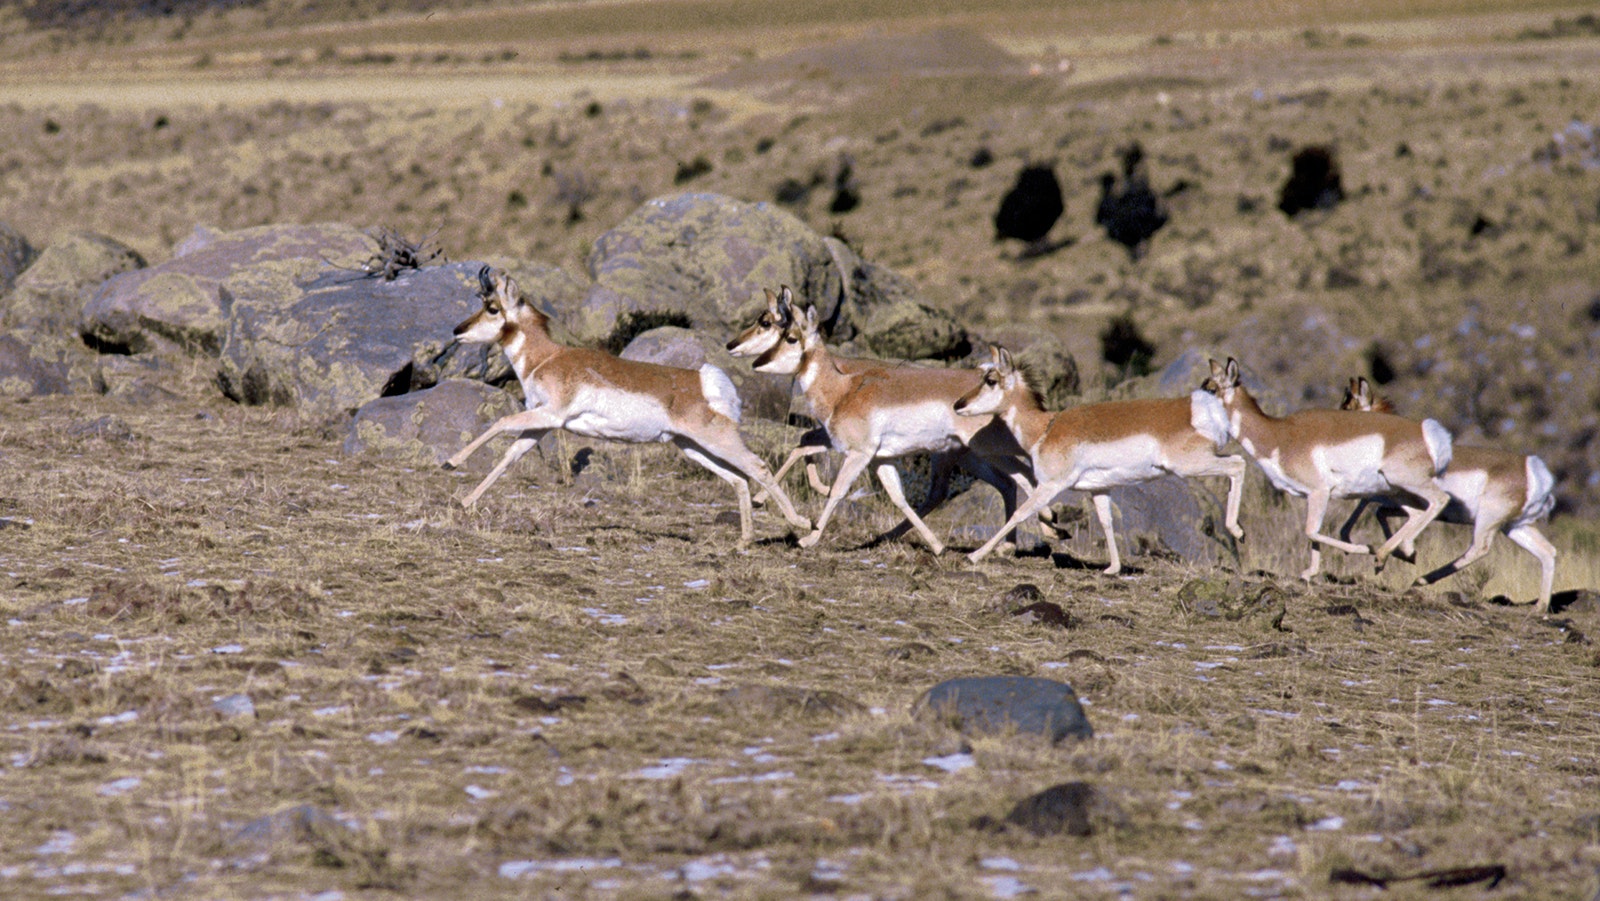 A herd of antelope run across open terrain.